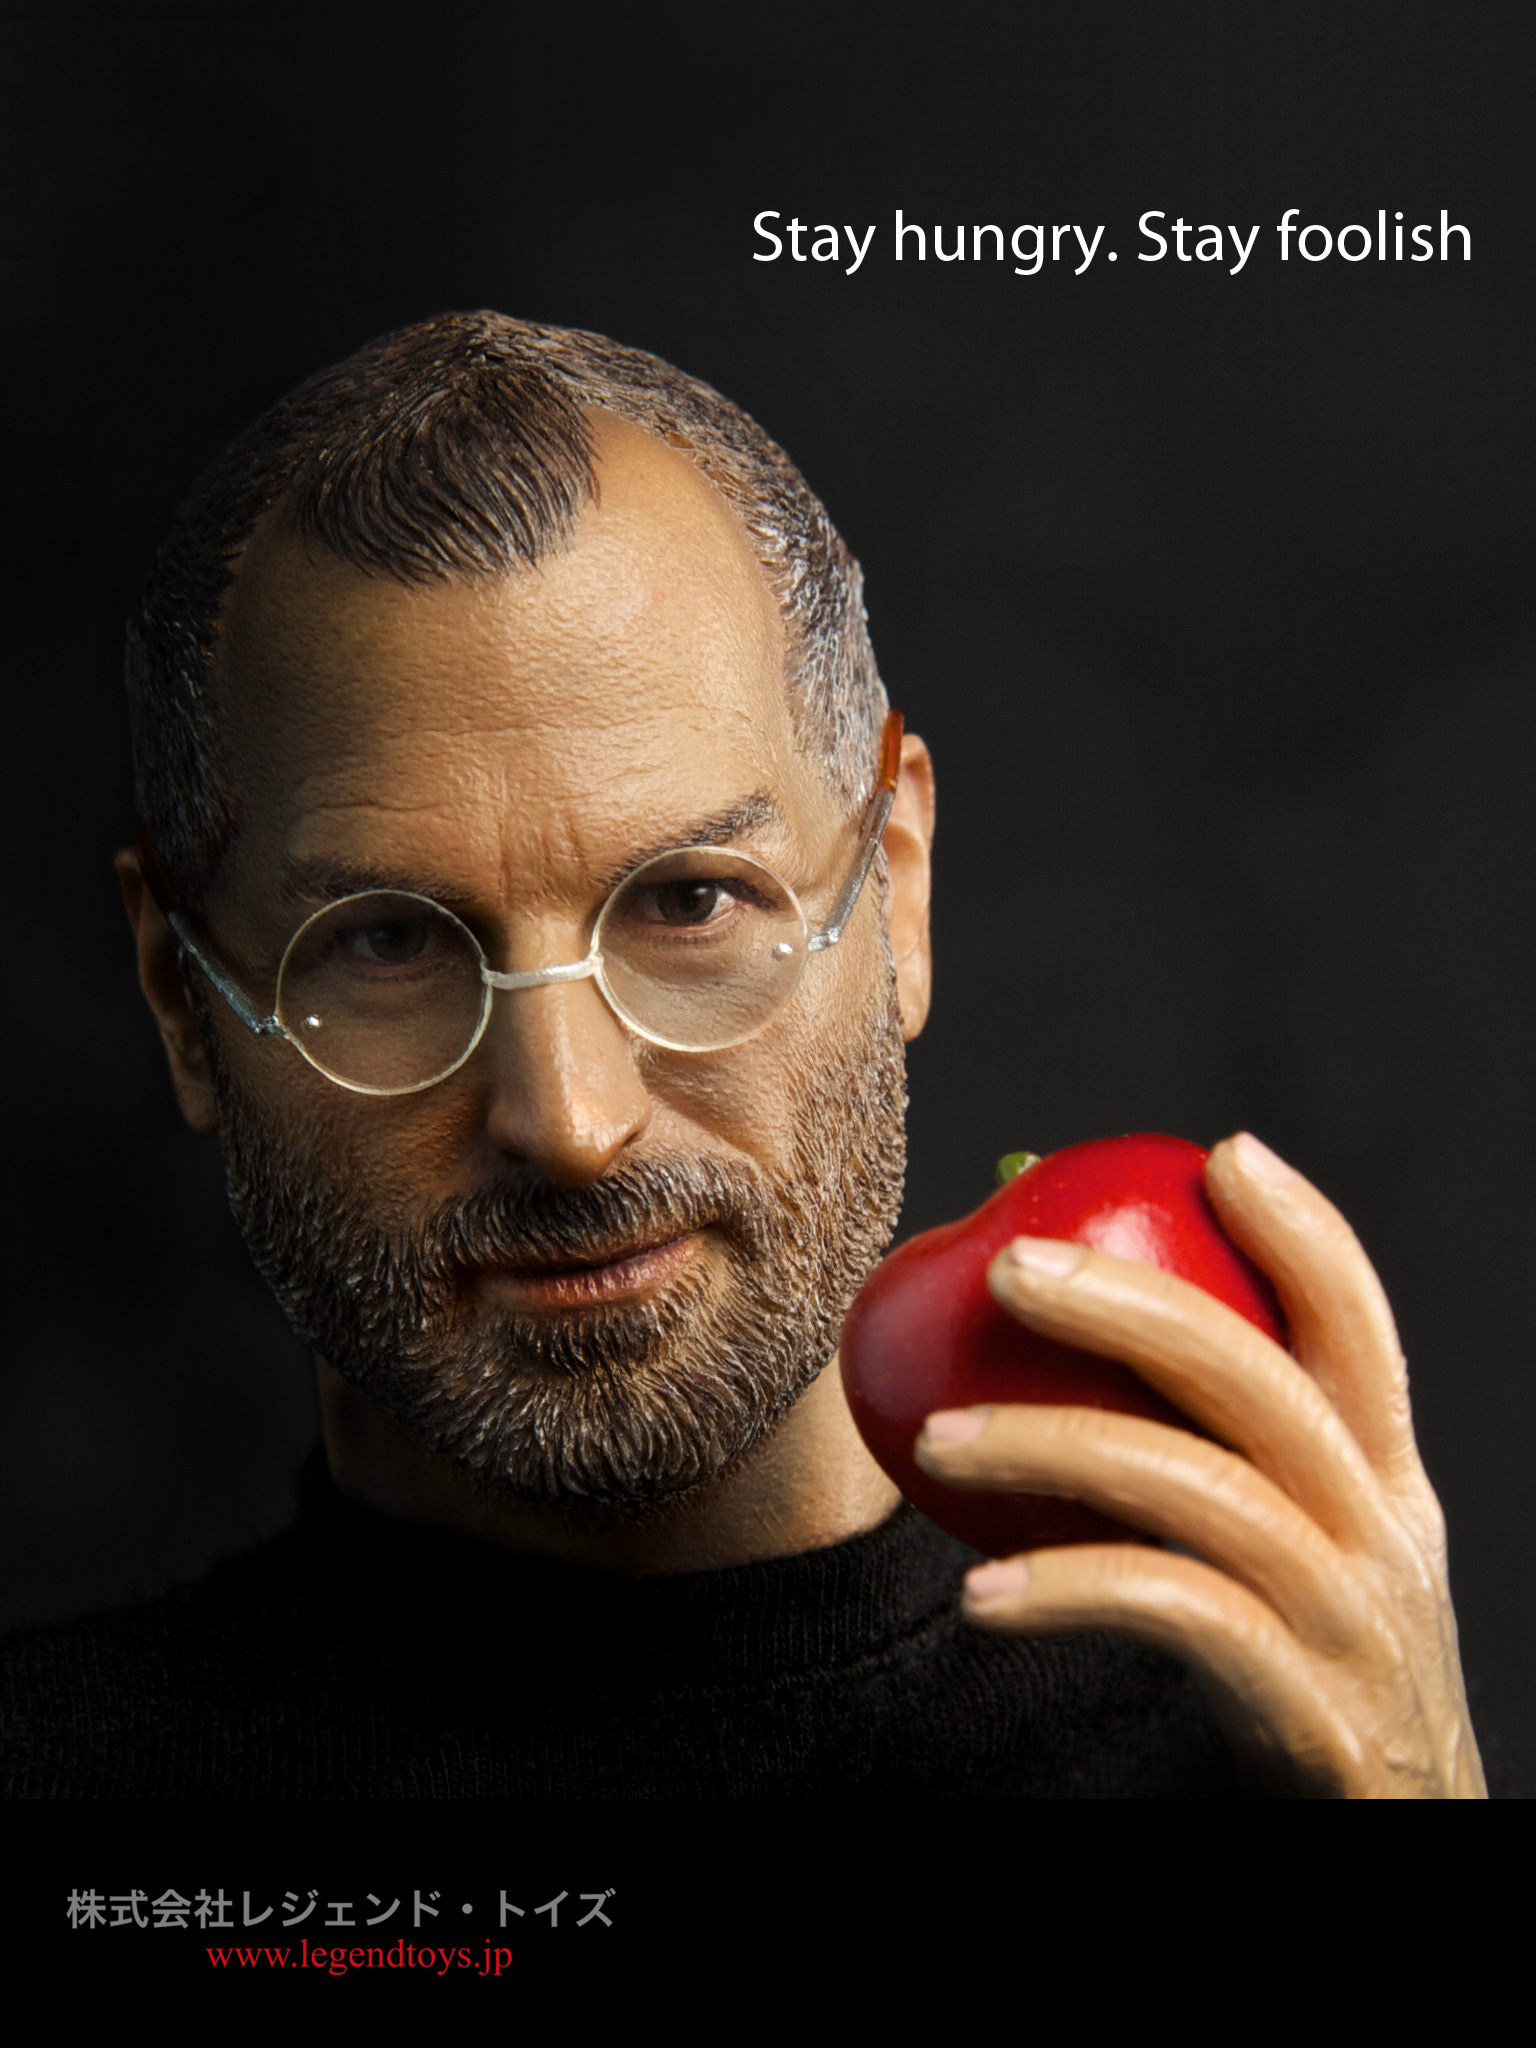 Steve Jobs As A Technopreneure